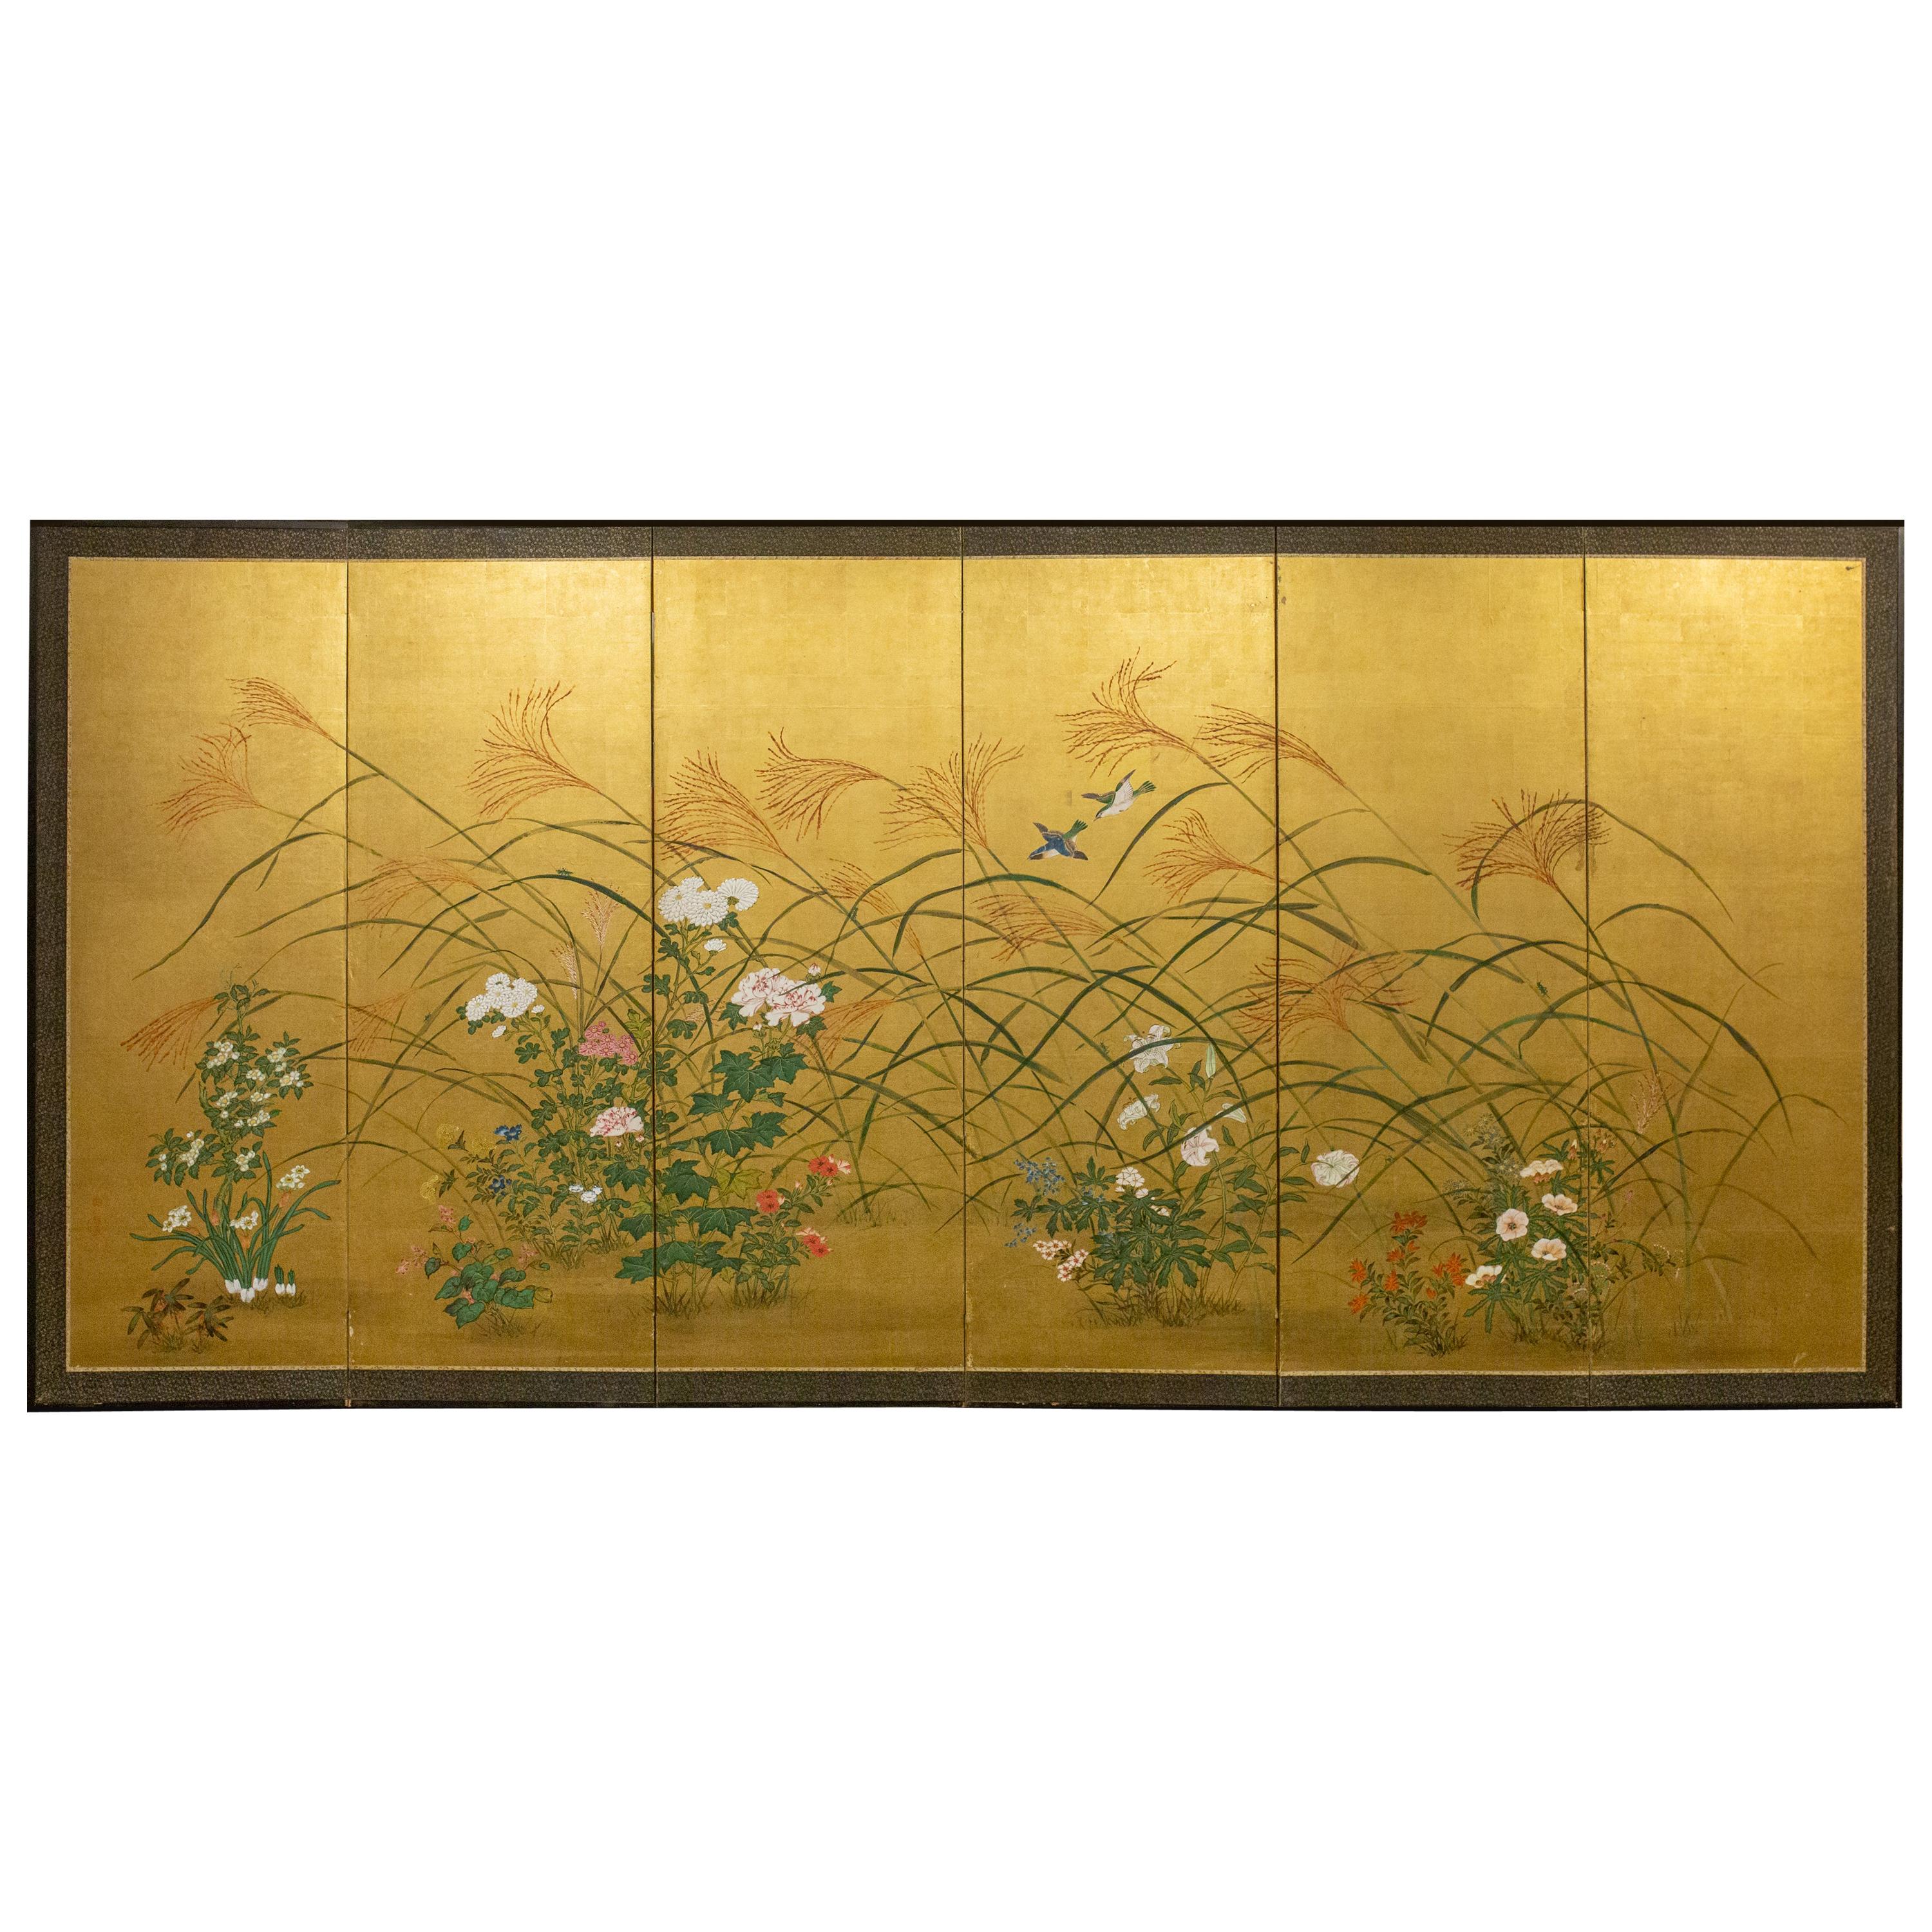 Japanese Six-Panel Screen, a Garden for All Seasons